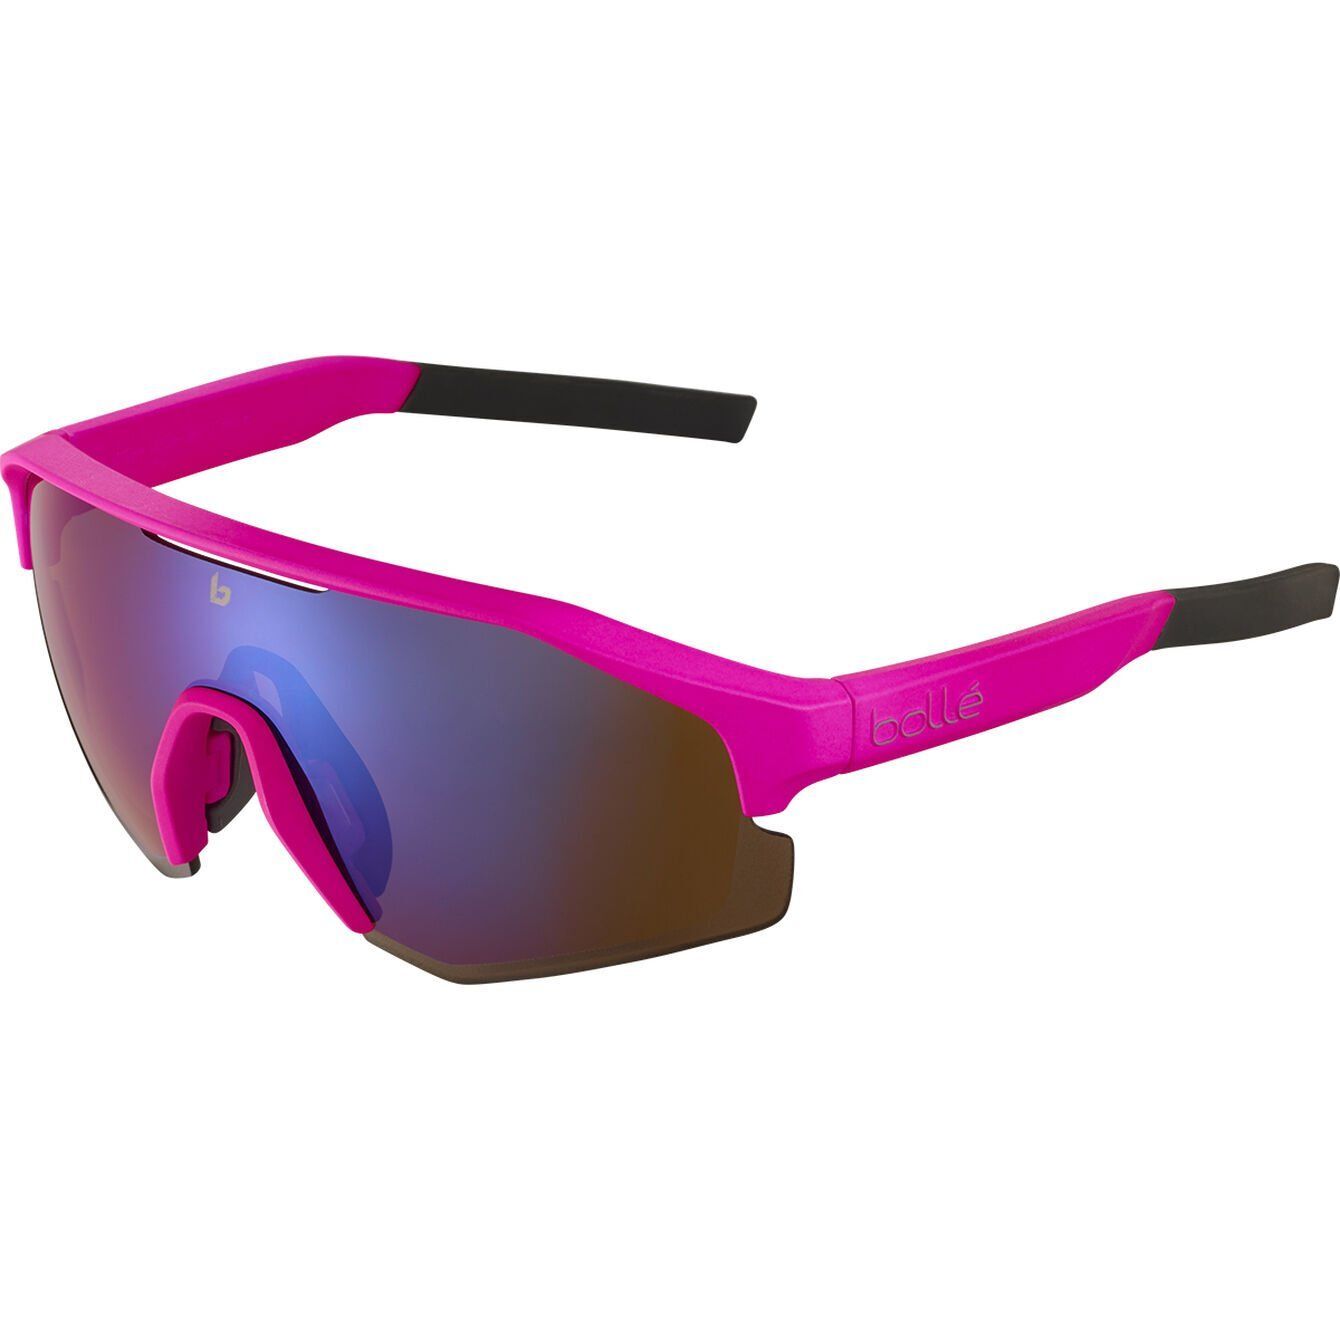 Bollé Lightshifter - Cycling sunglasses